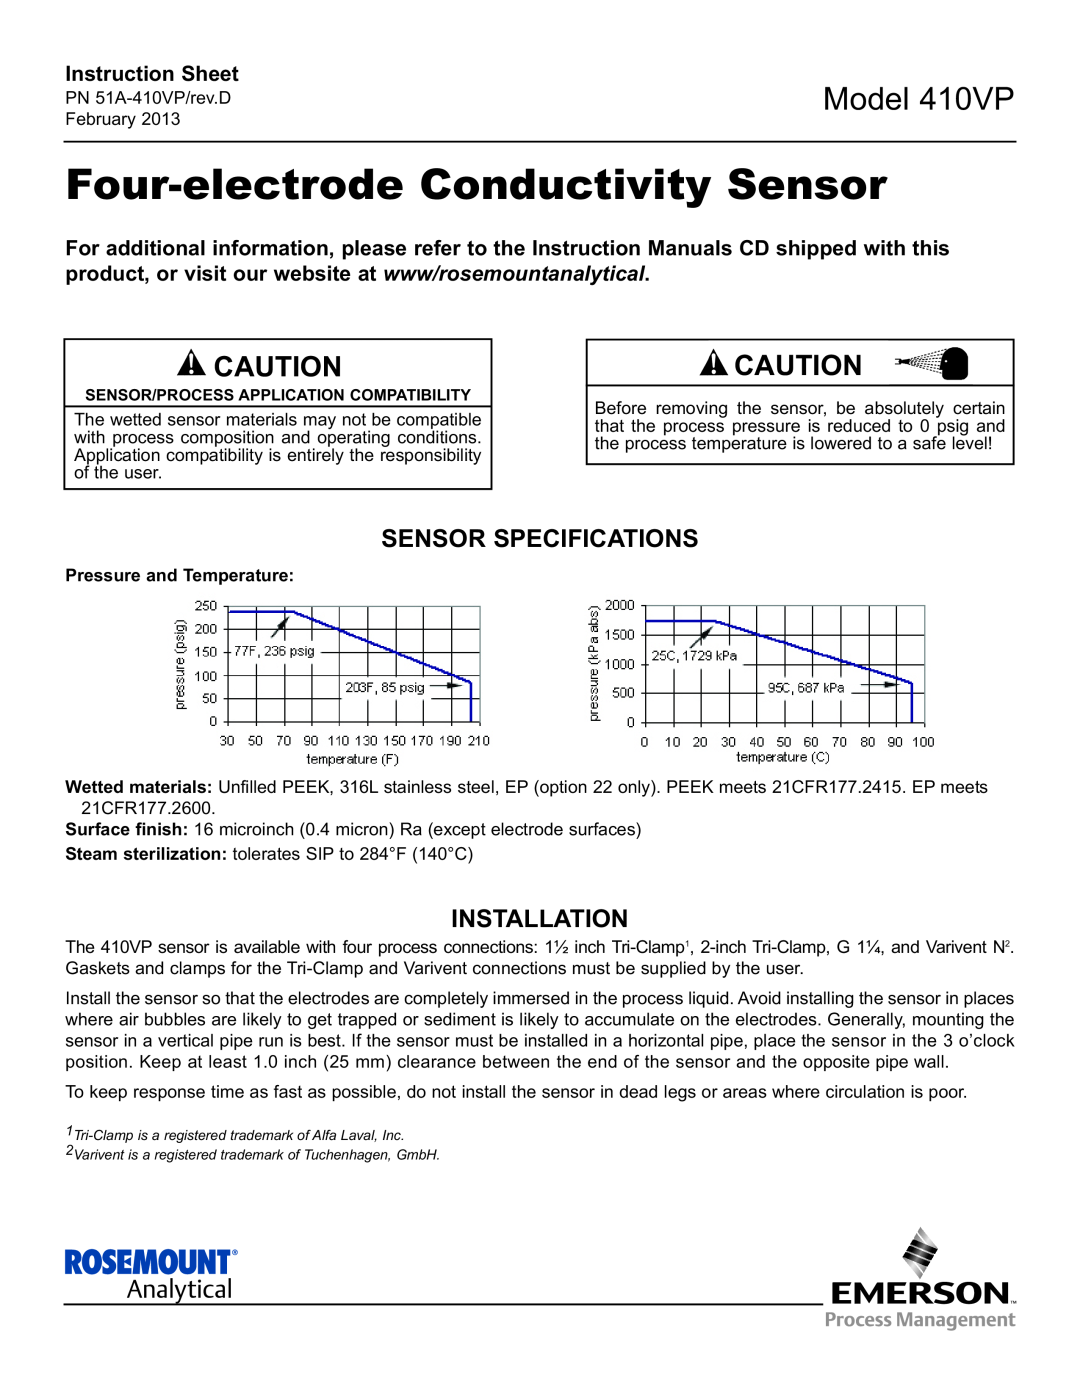 Emerson instruction sheet Sensor Specifications, Installation, Four-electrode Conductivity Sensor, Model 410VP 